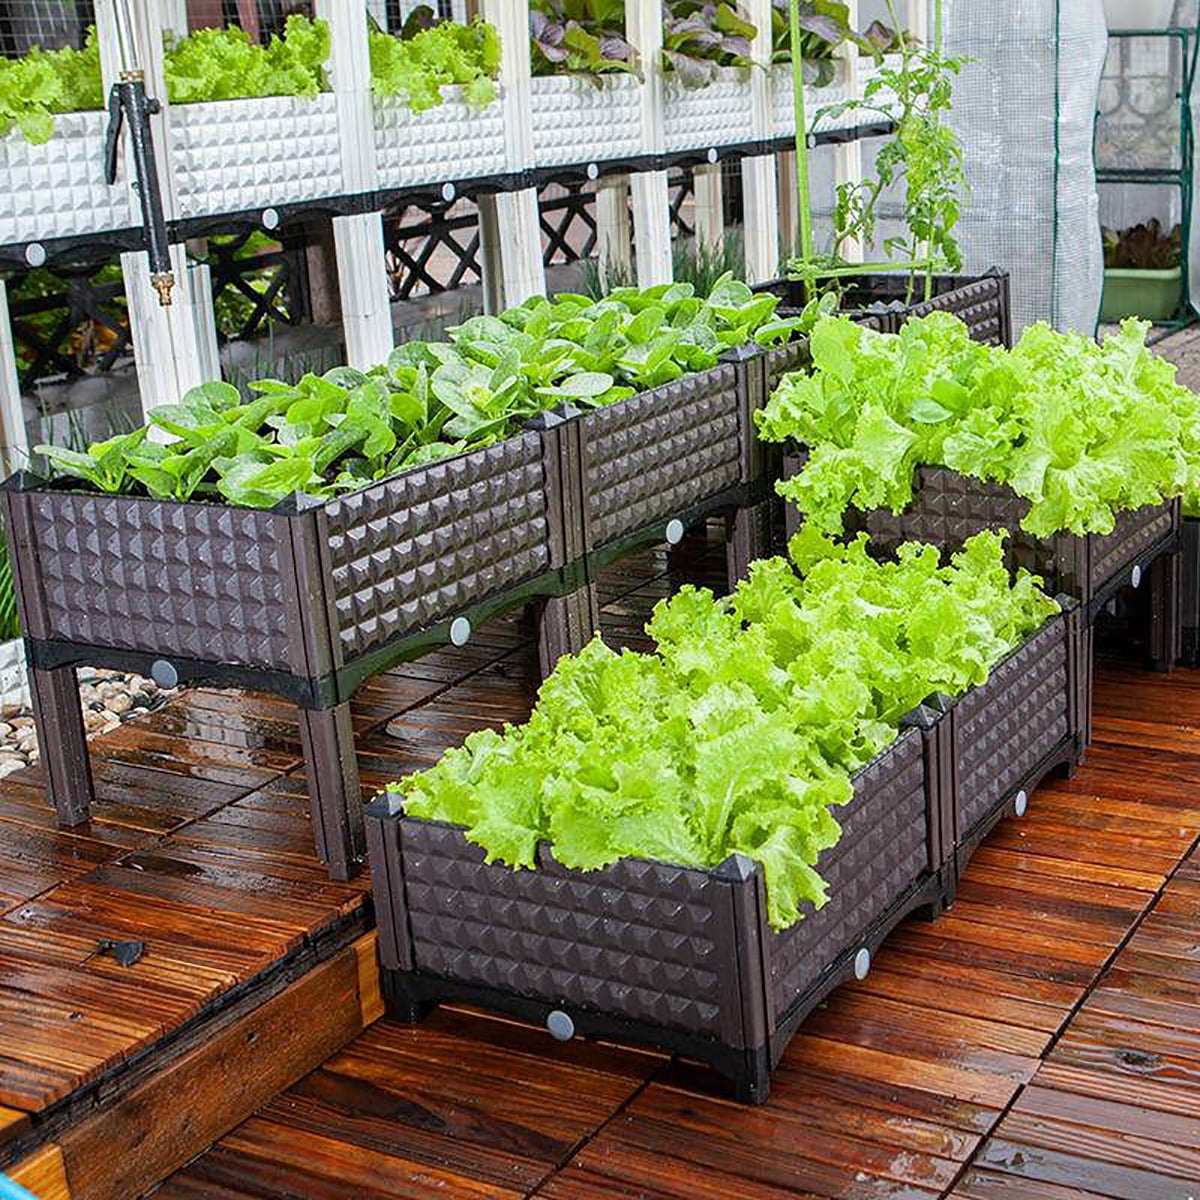  raised vegetable garden planters